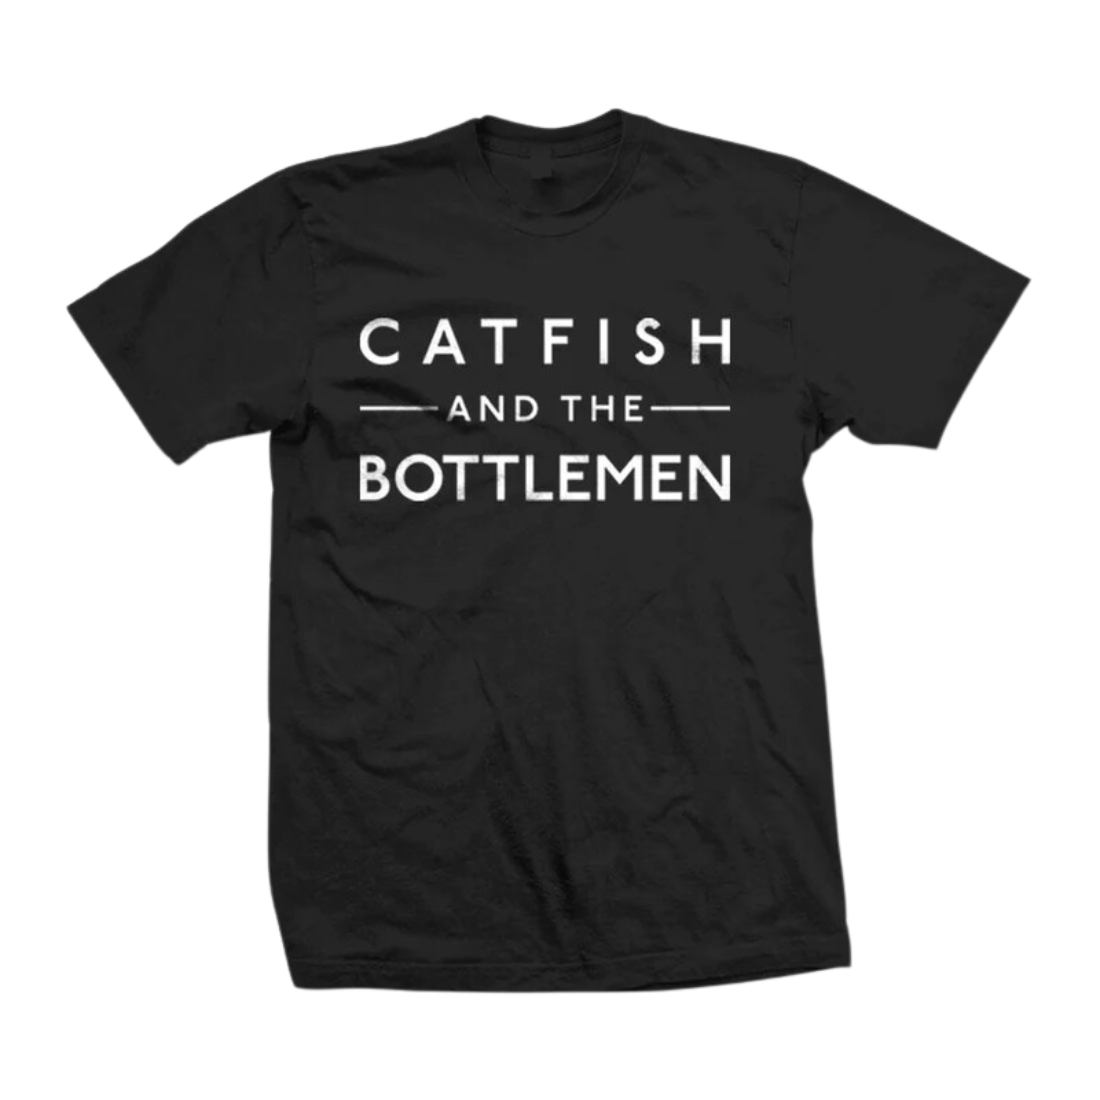 Catfish and the Bottlemen - Catfish and the Bottlemen Logo T-Shirt